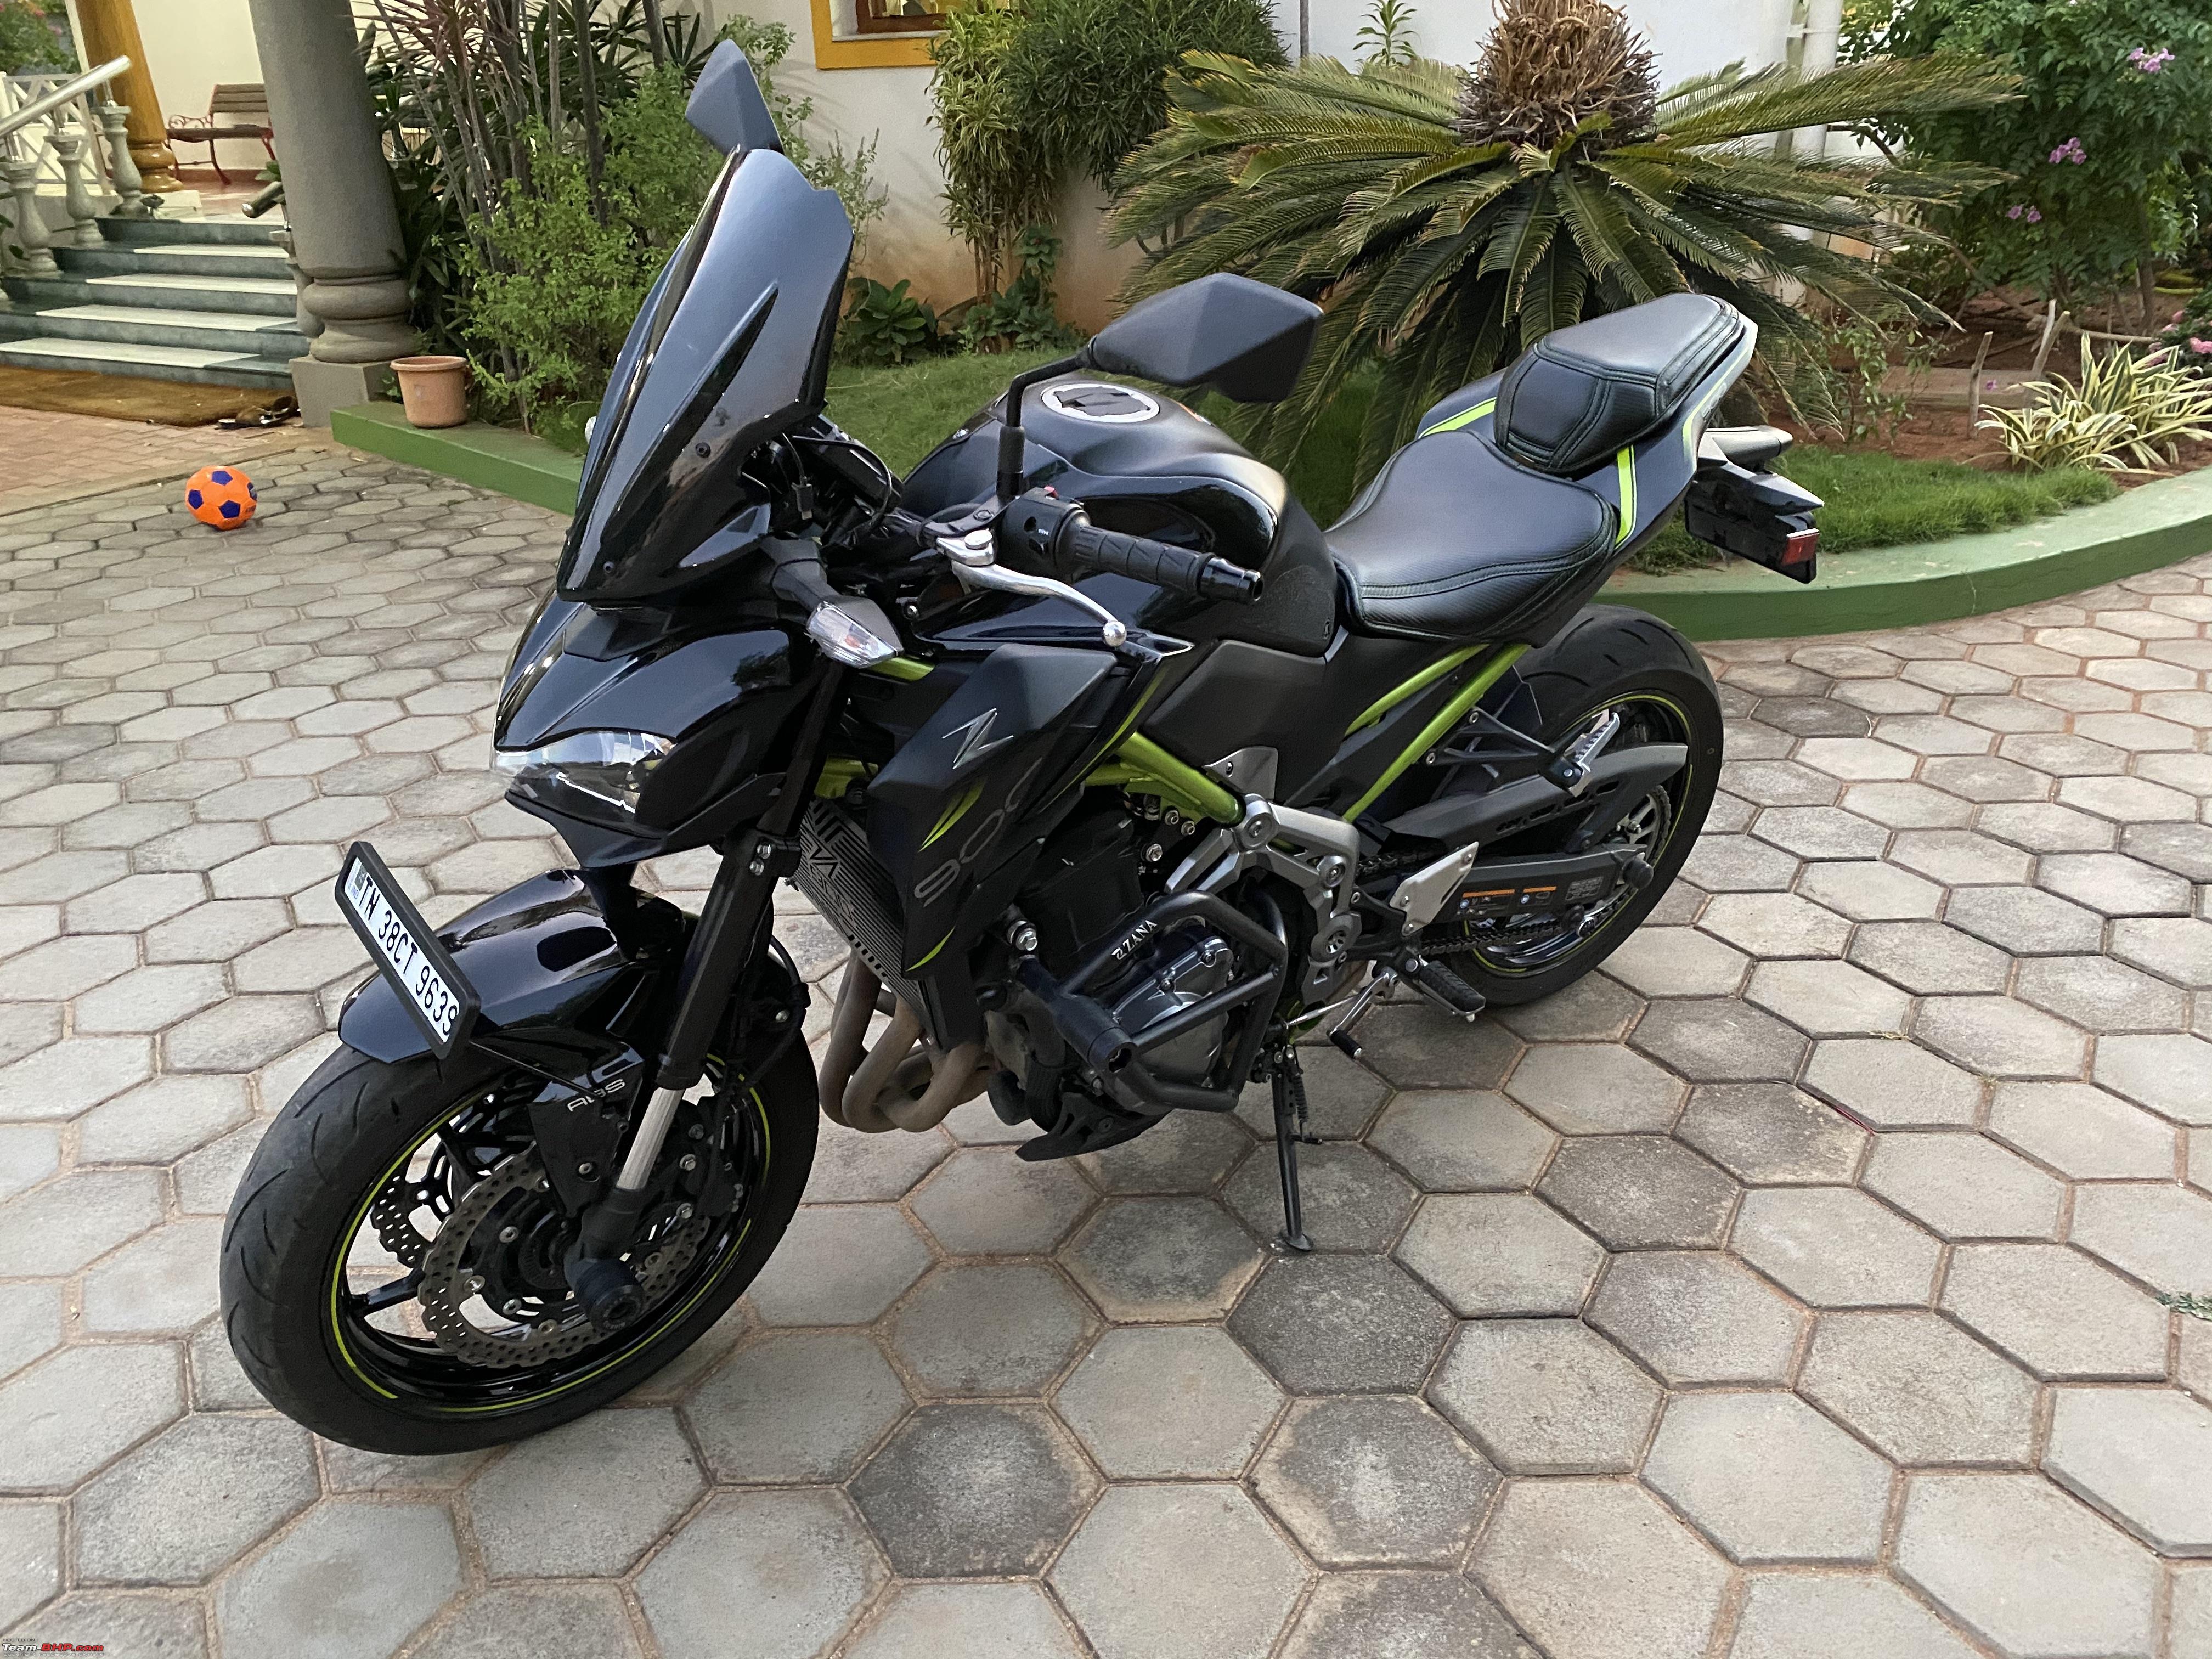 The Kawasaki Z900 comes home : My Black Hornet - Team-BHP